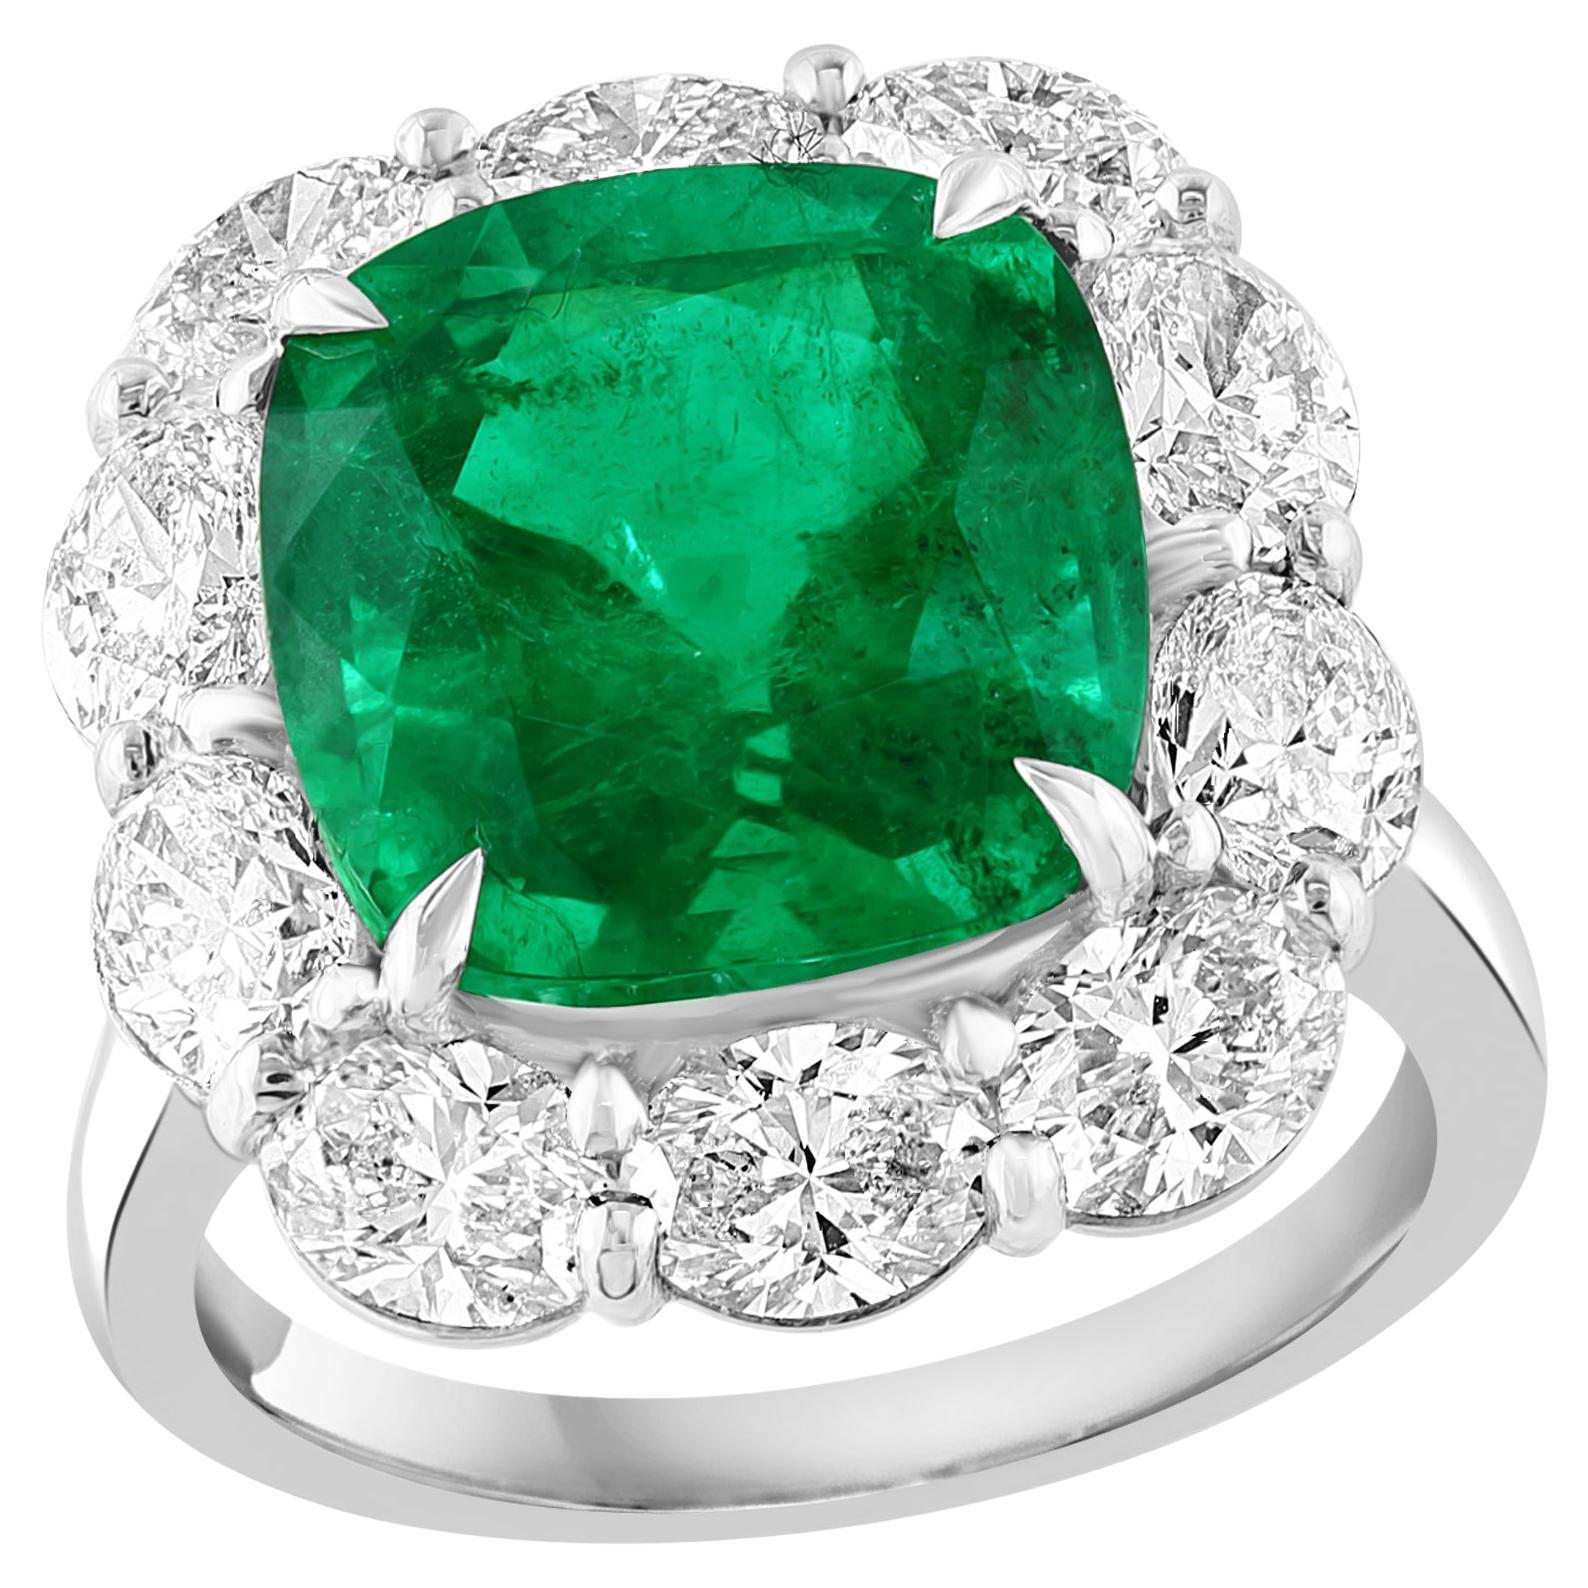 Certified 6.58 Carat Cushion Cut Emerald Diamond Ring in Platinum For Sale